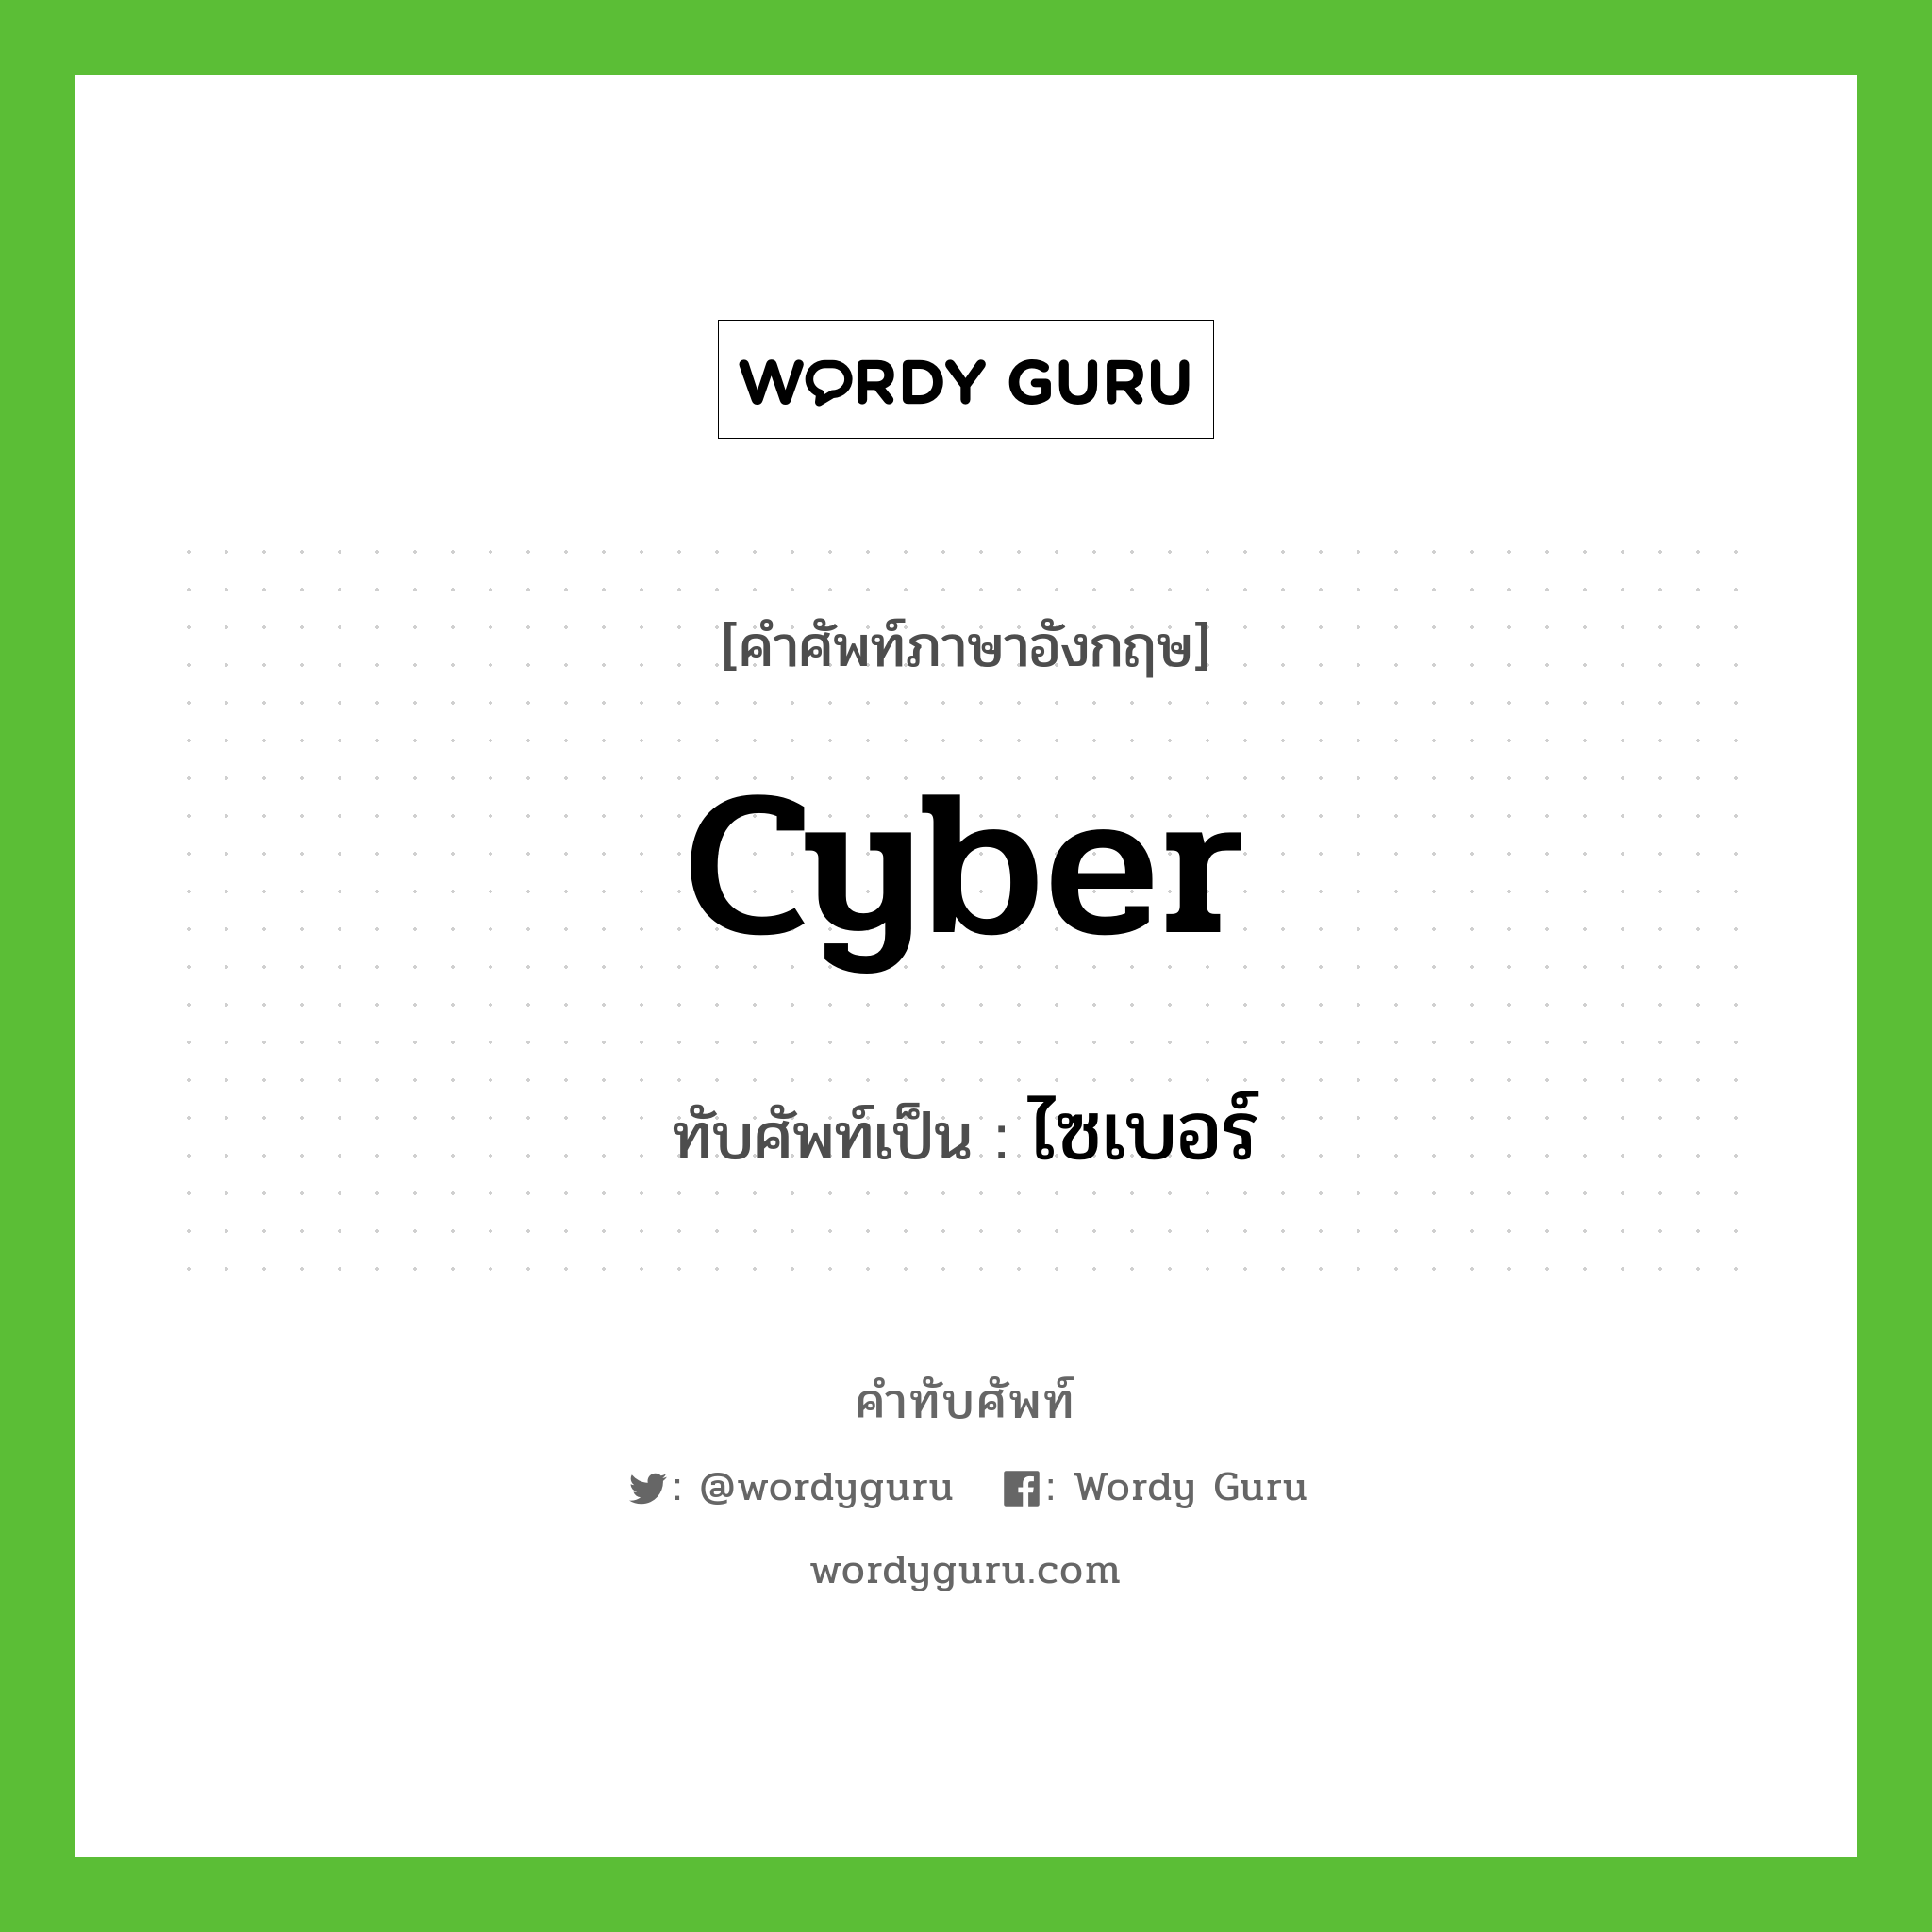 cyber เขียนเป็นคำไทยว่าอะไร?, คำศัพท์ภาษาอังกฤษ cyber ทับศัพท์เป็น ไซเบอร์